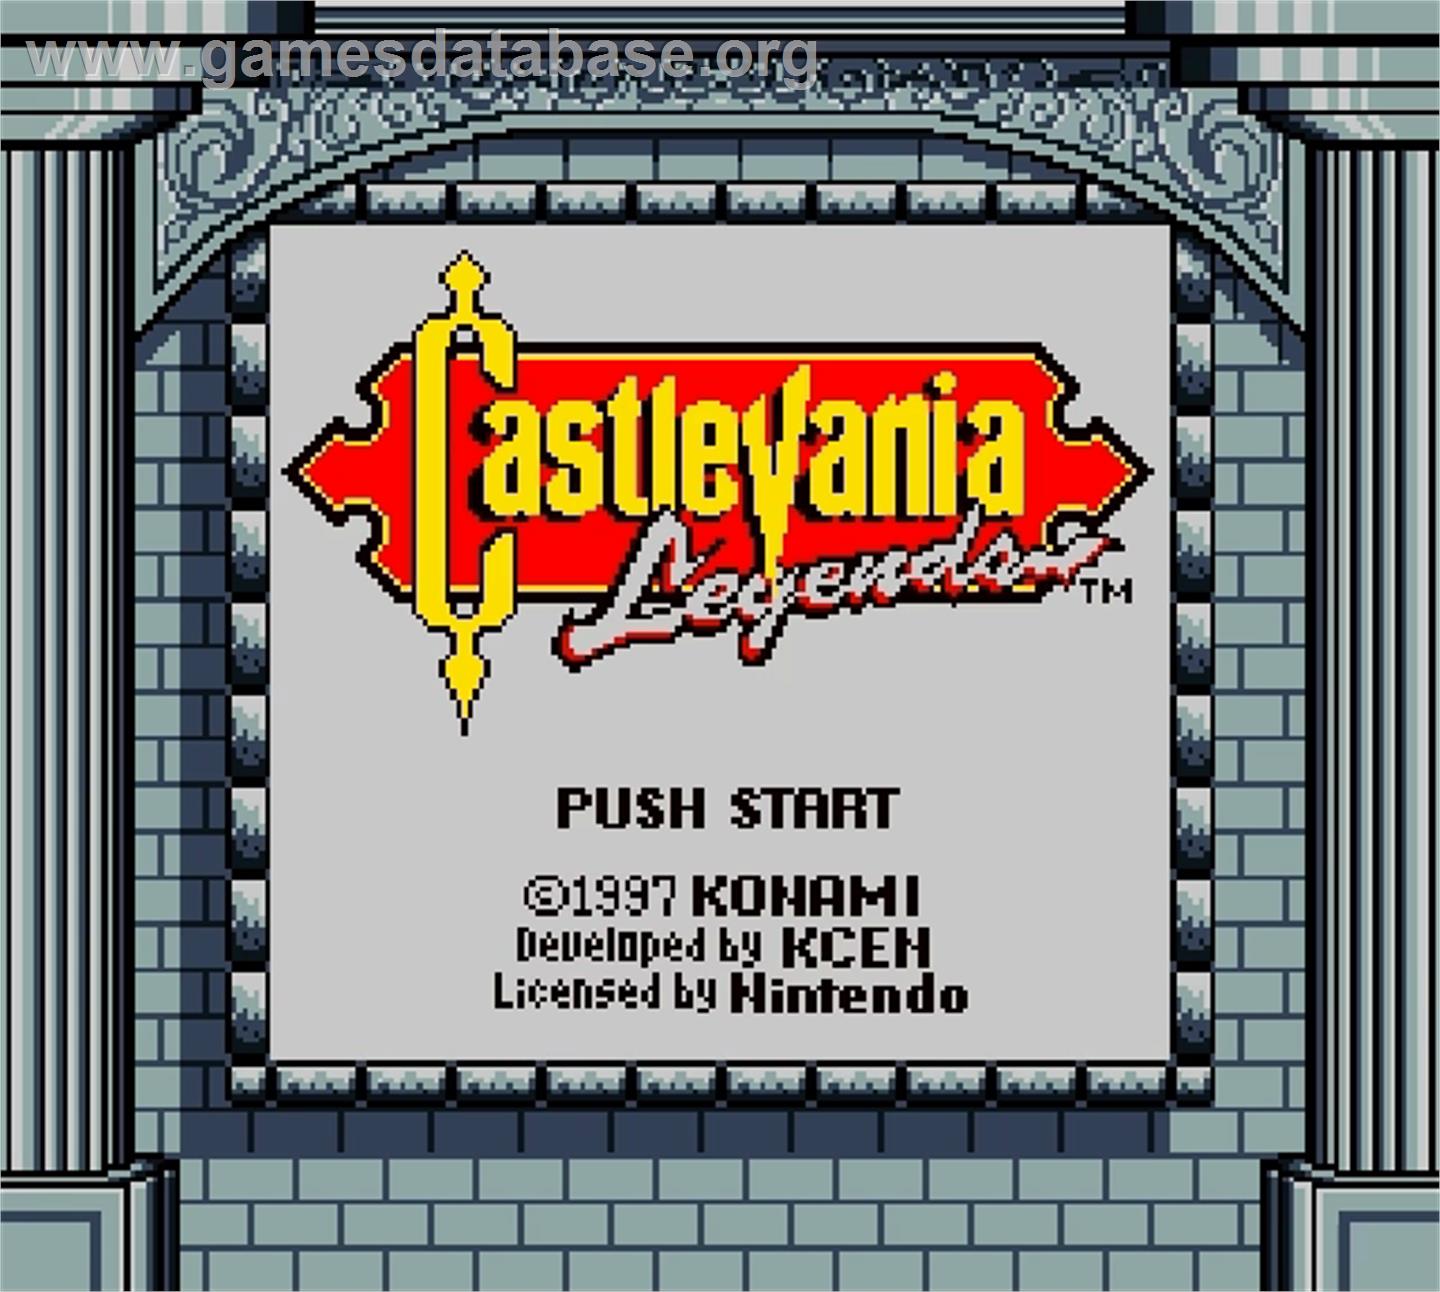 Castlevania - Legends - Nintendo Super Gameboy - Artwork - Title Screen